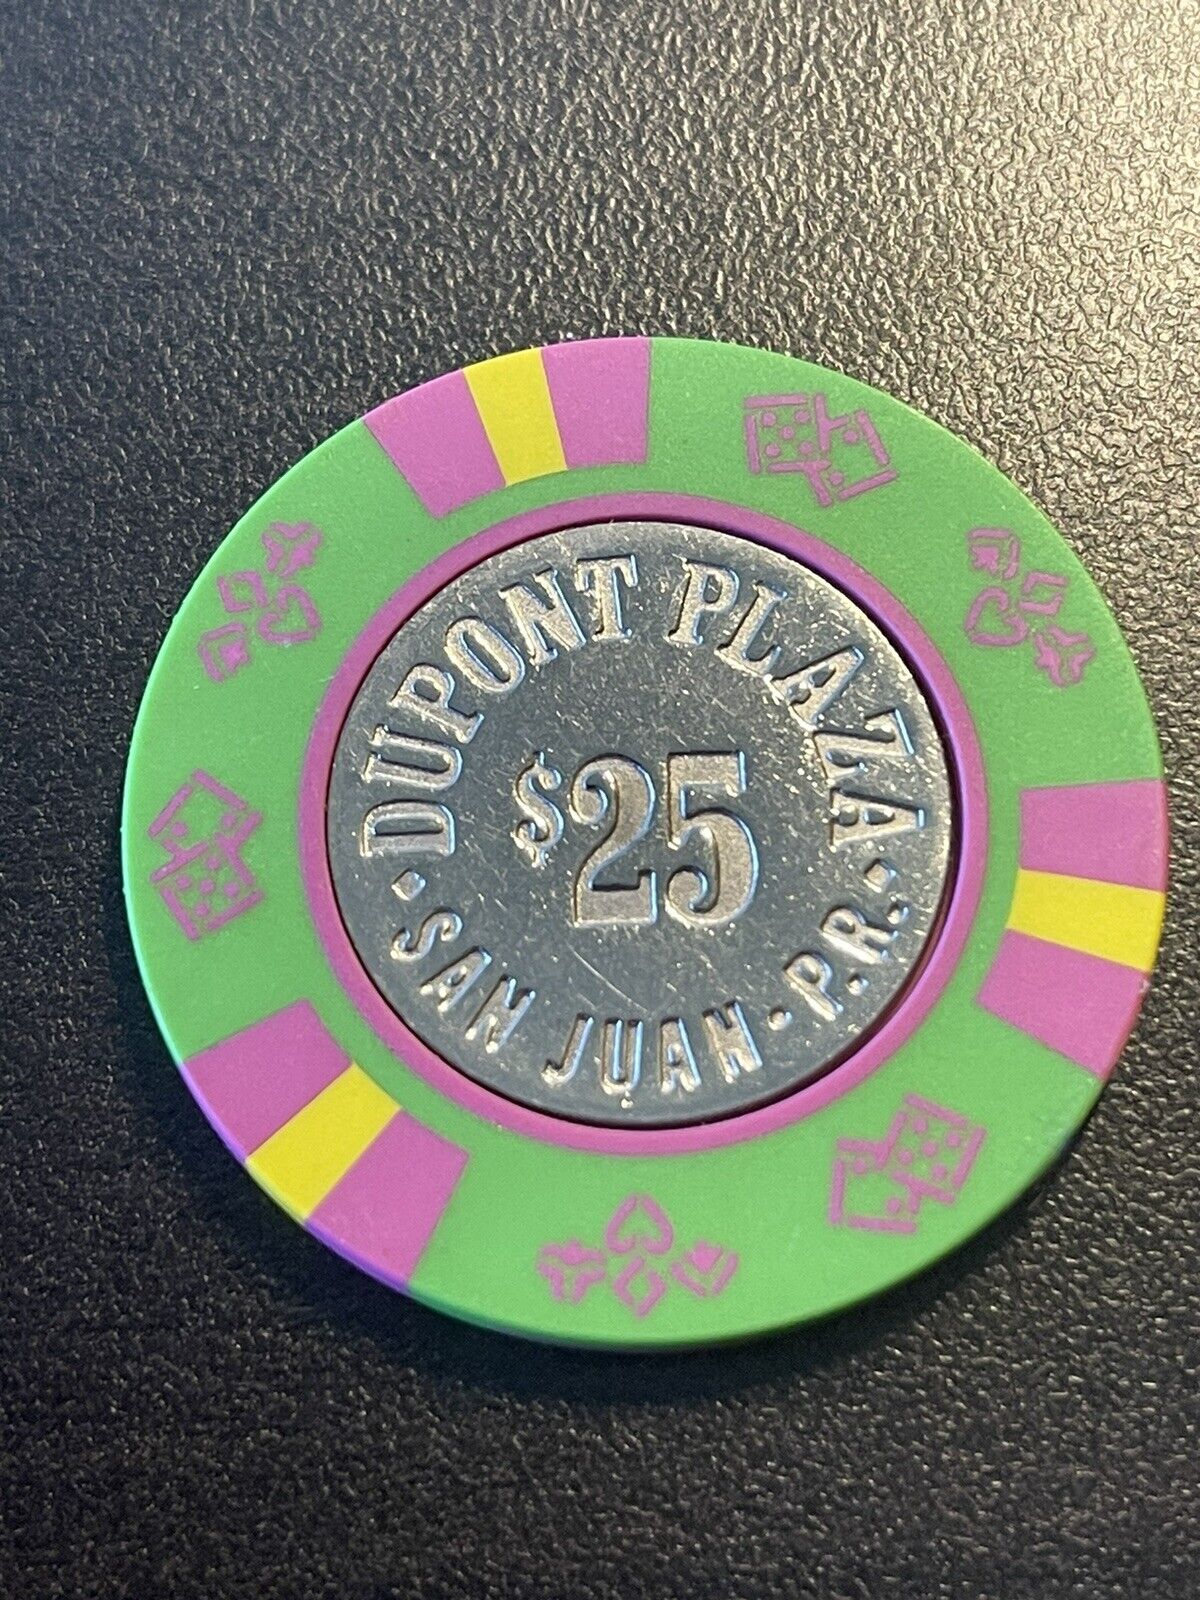 $25 Dupont Plaza San Juan Puerto Rico Casino Chip DPL-25 ***VERY RARE***